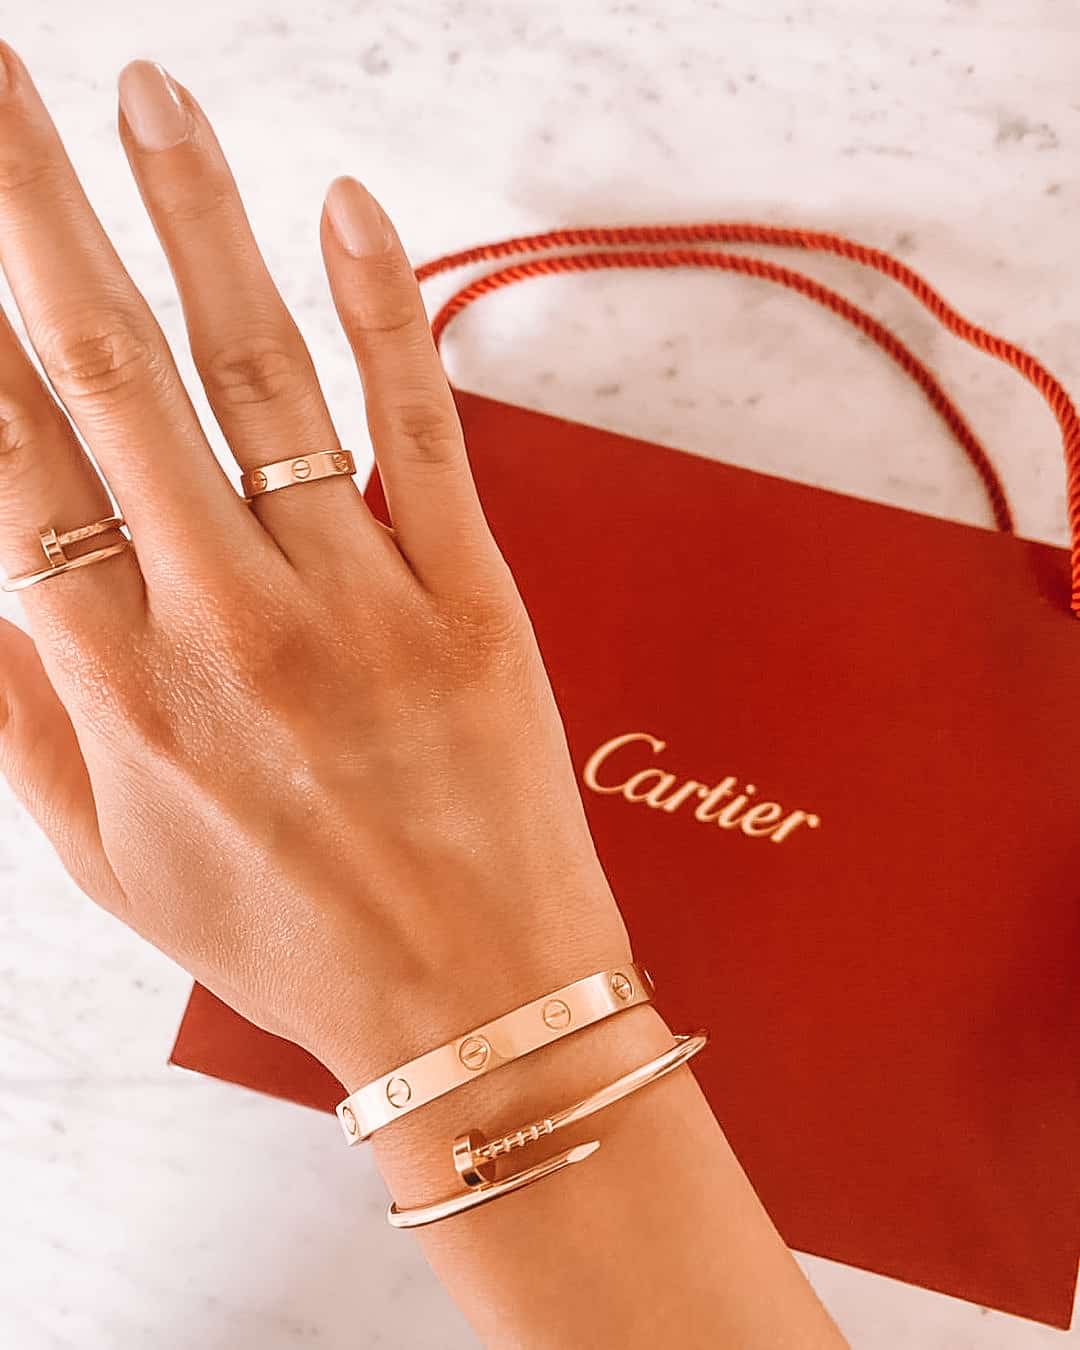 Cartier Cheaper in Europe